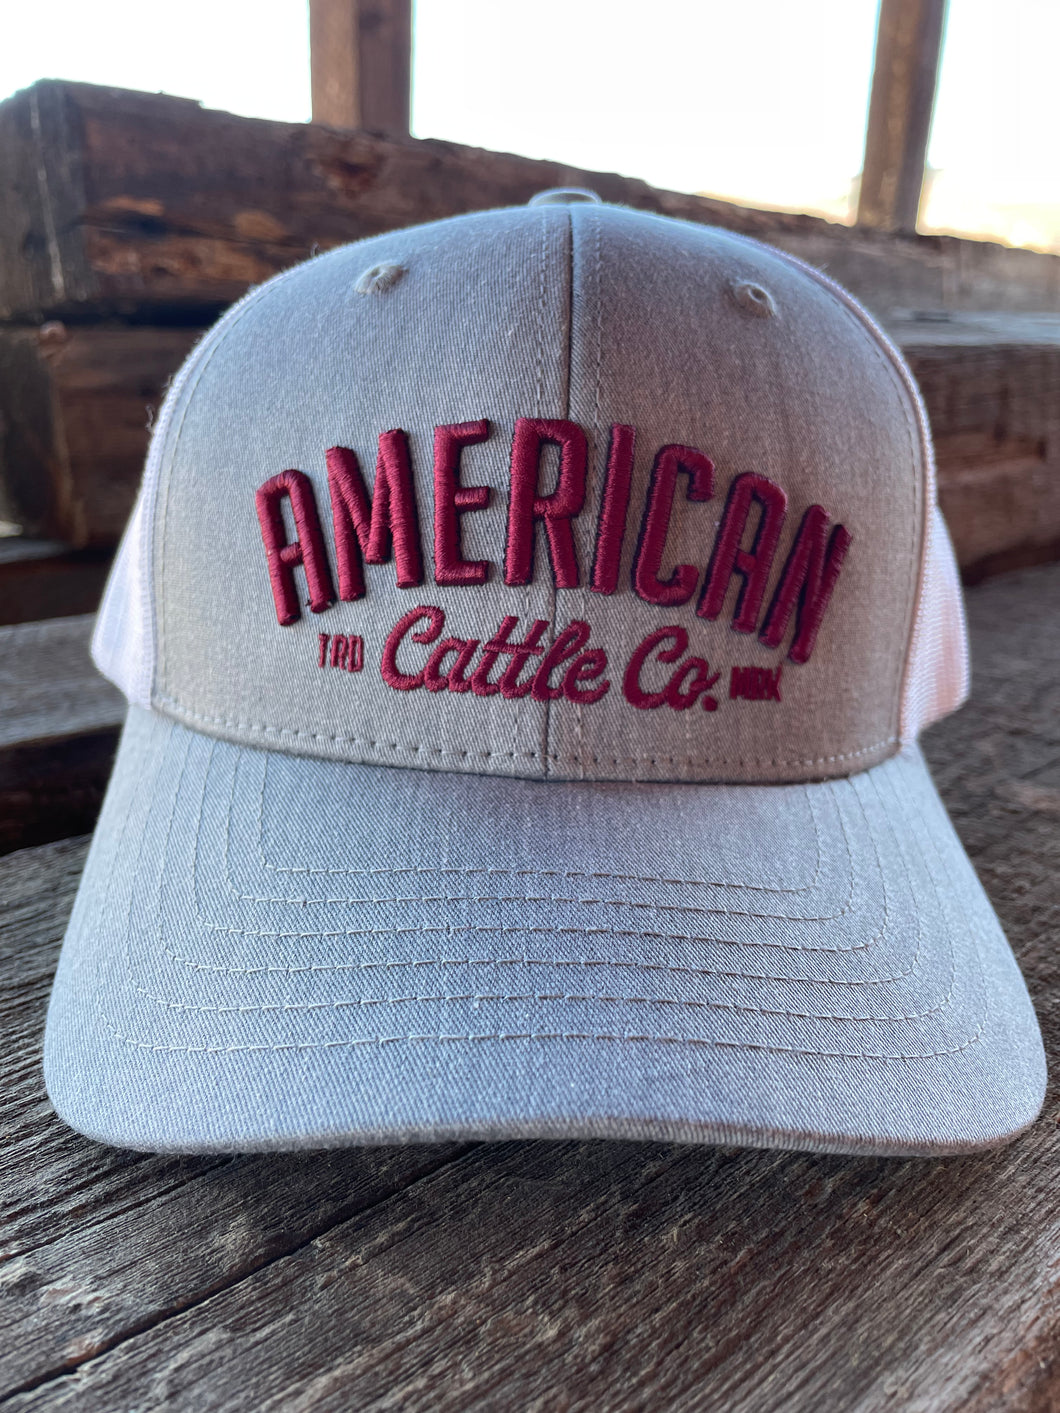 American Cattle Company cap